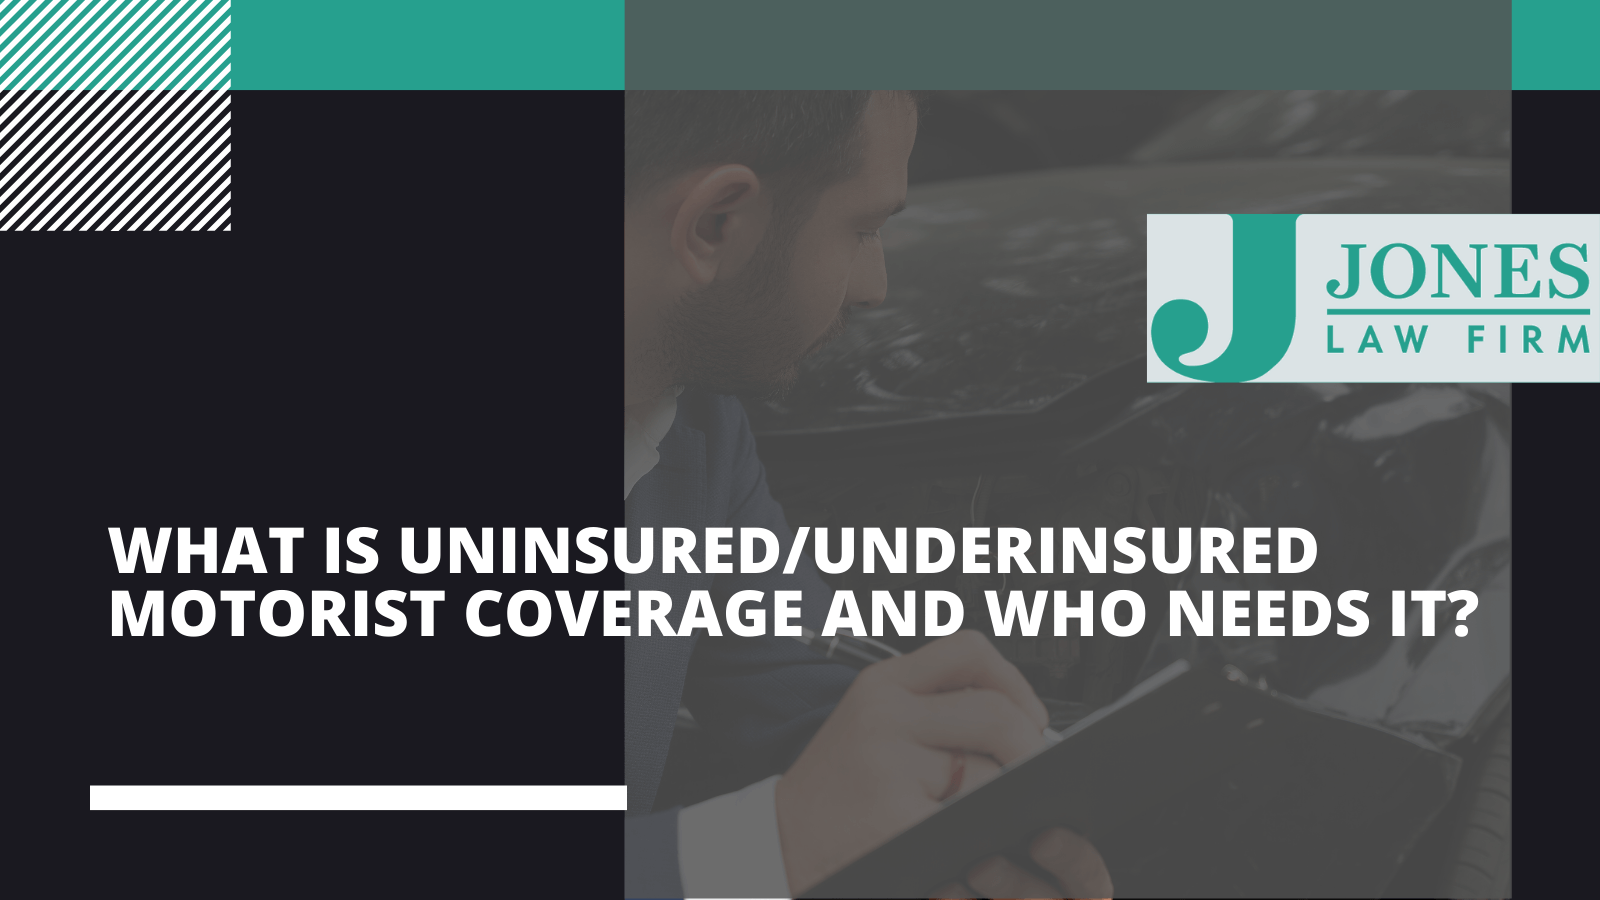 What is uninsured/underinsured motorist coverage and who needs it? - Jones law firm - Alexandria louisiana